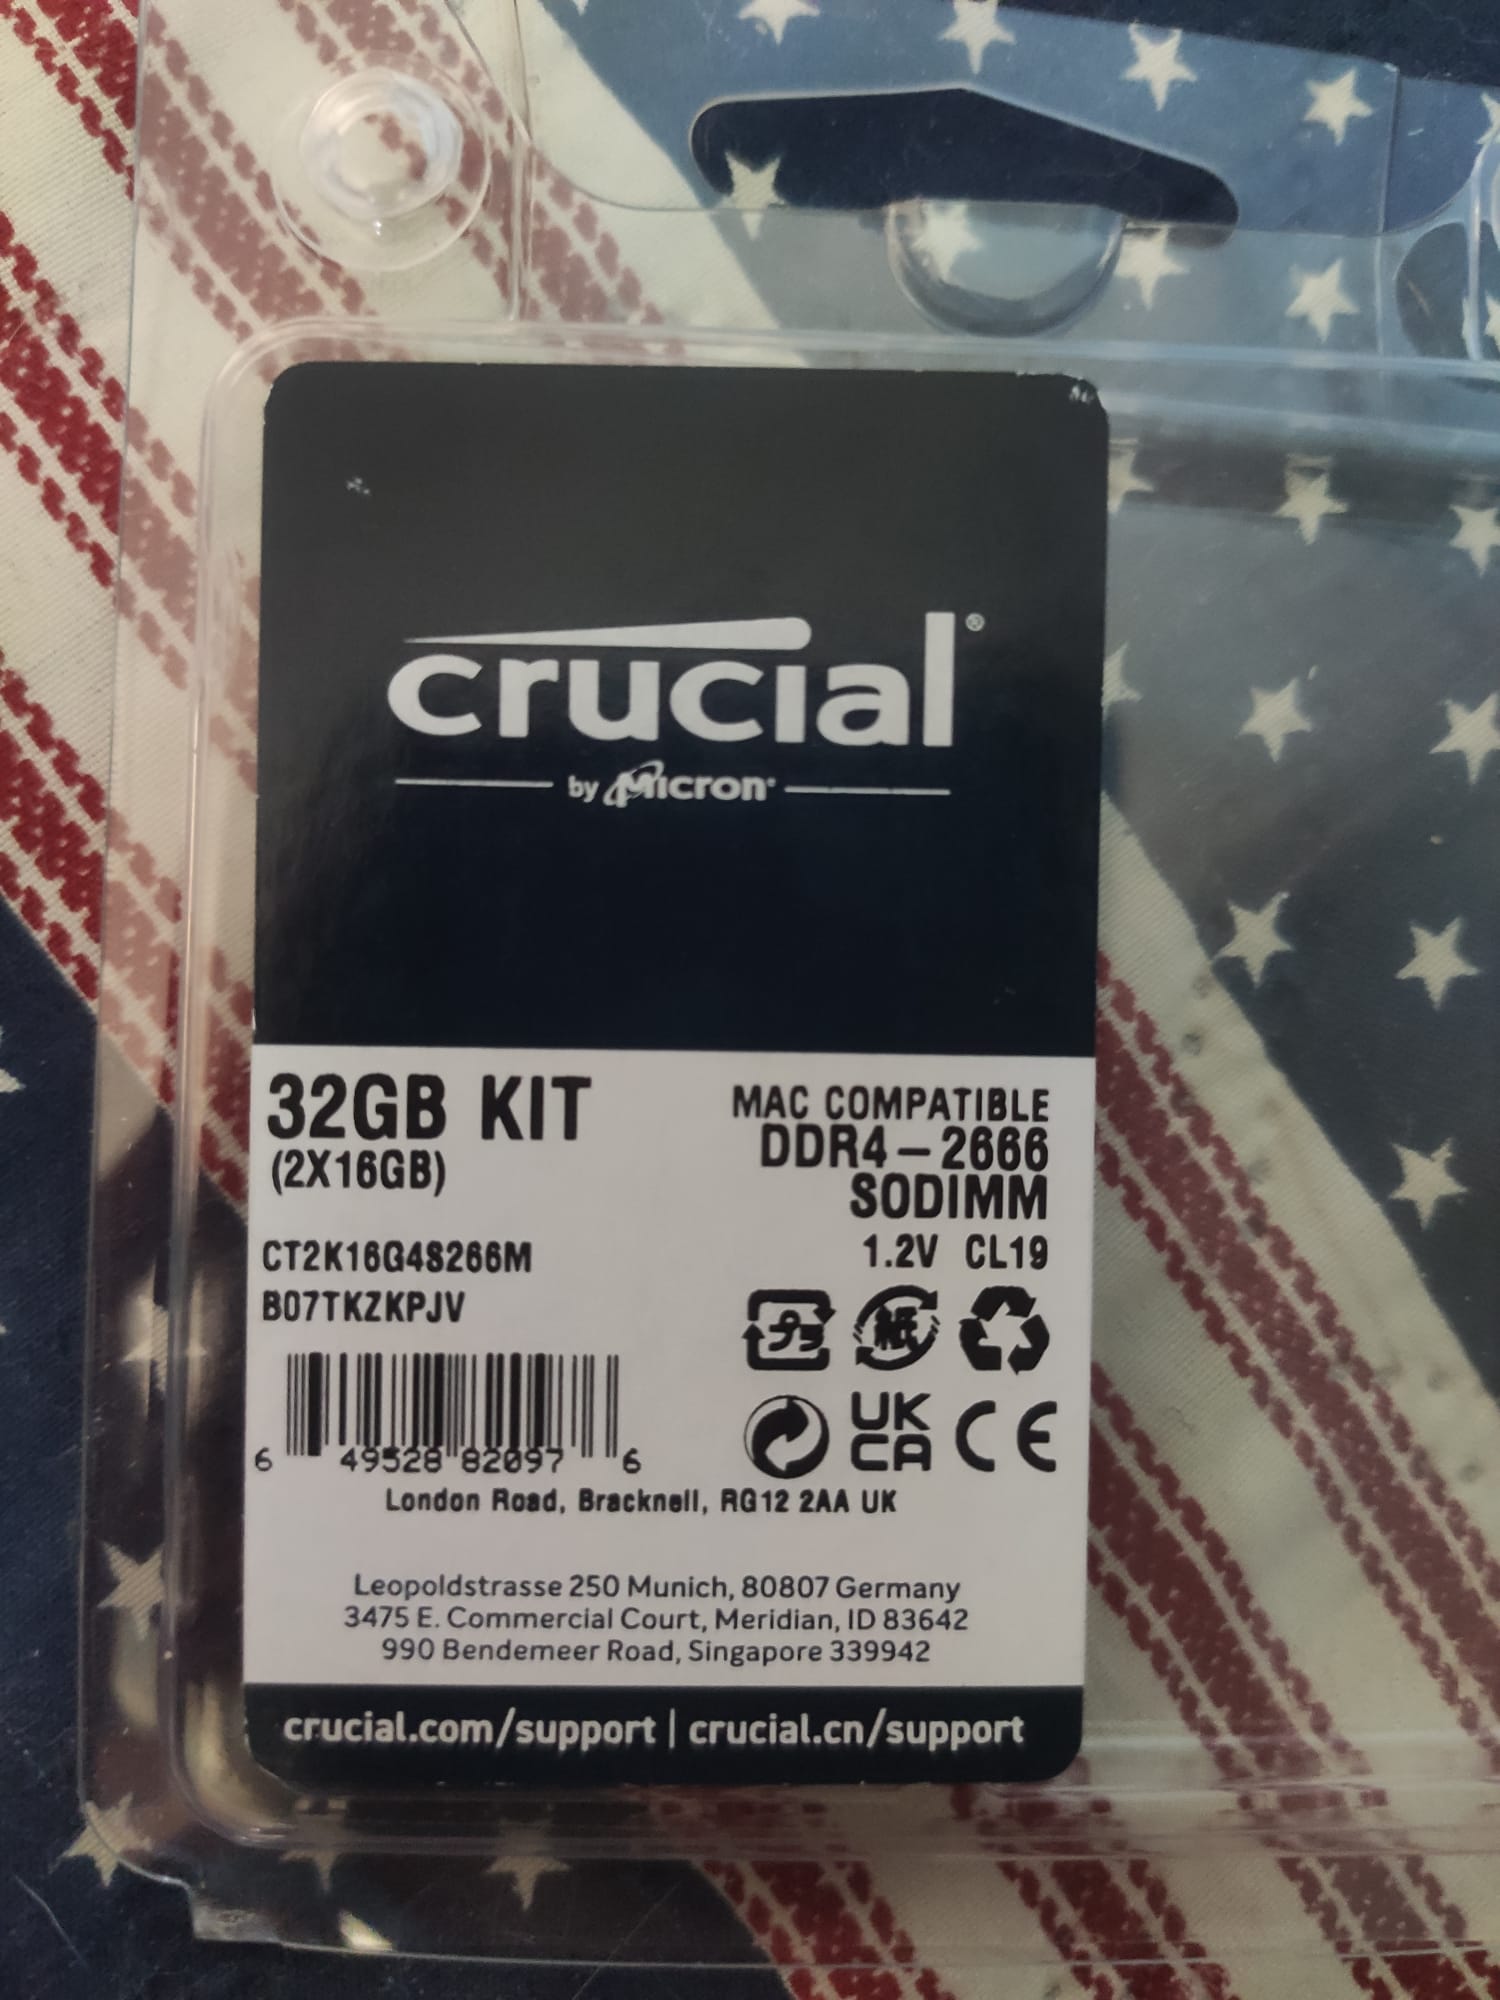 Crucial 32GB Kit (2x16GB) DDR4-2666 SODIMM for Mac